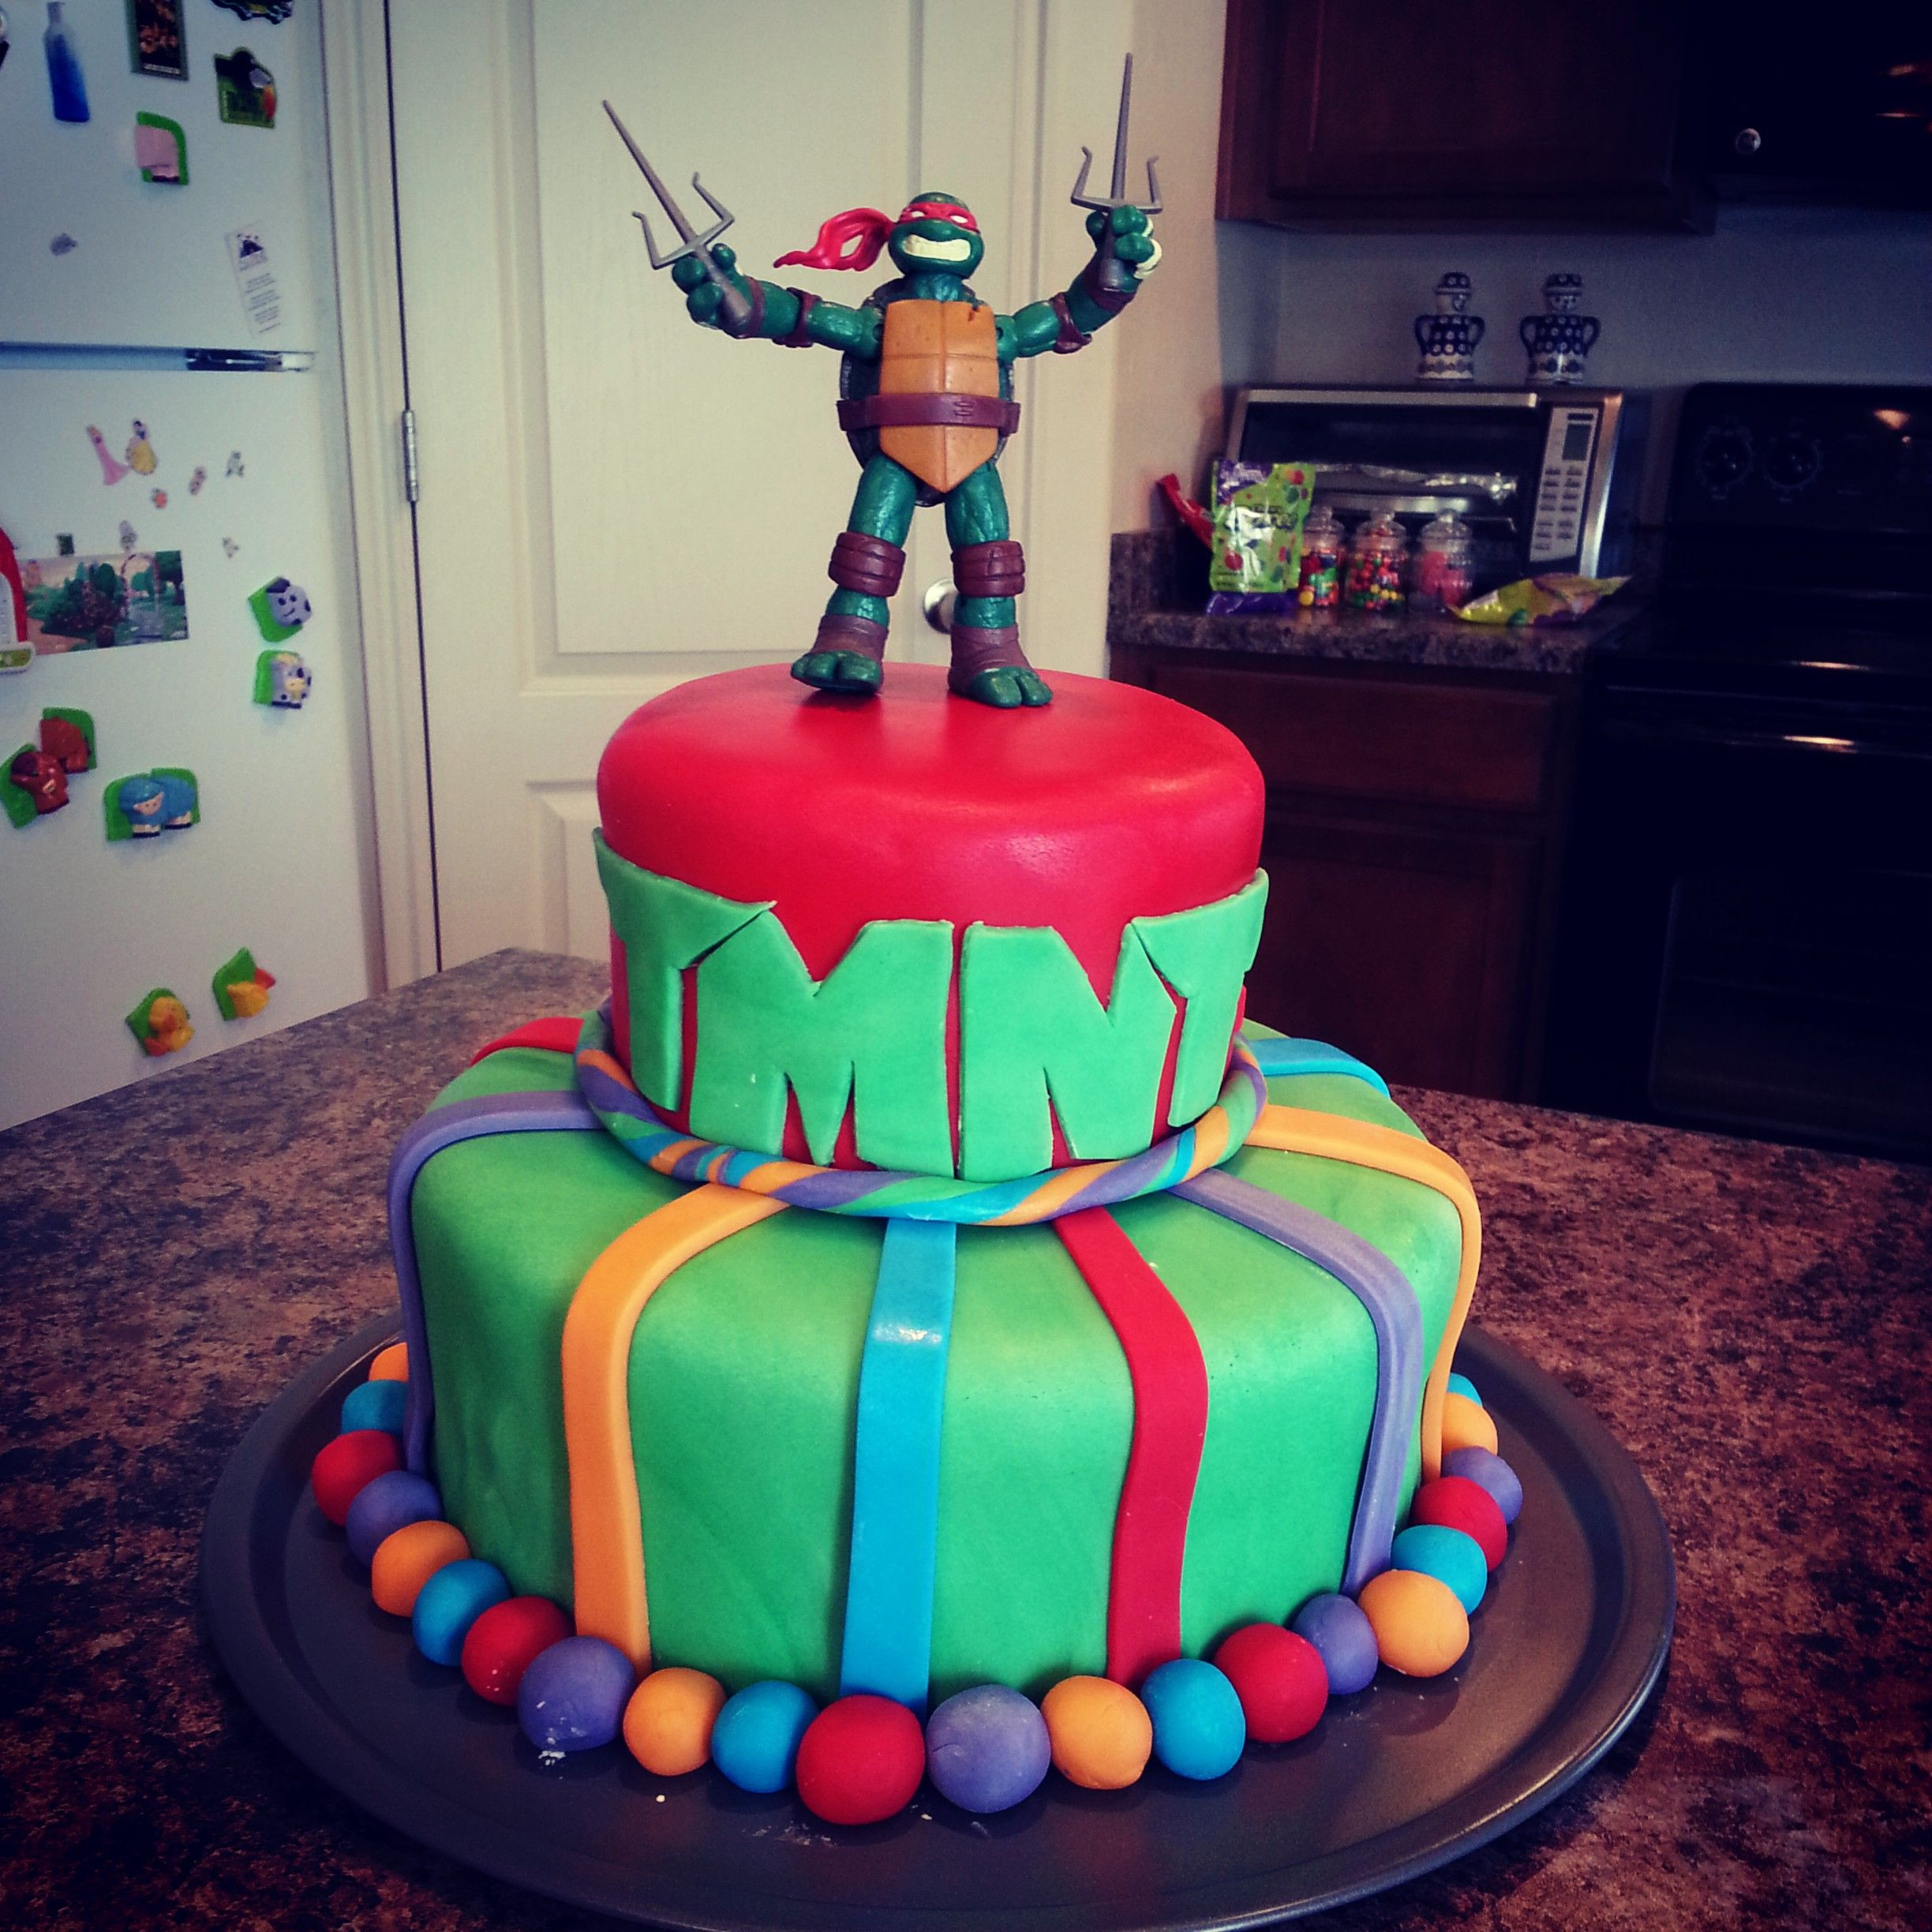 Best ideas about Ninja Turtles Birthday Cake
. Save or Pin Teenage Mutant Ninja Turtle Birthday Cake fondant Now.